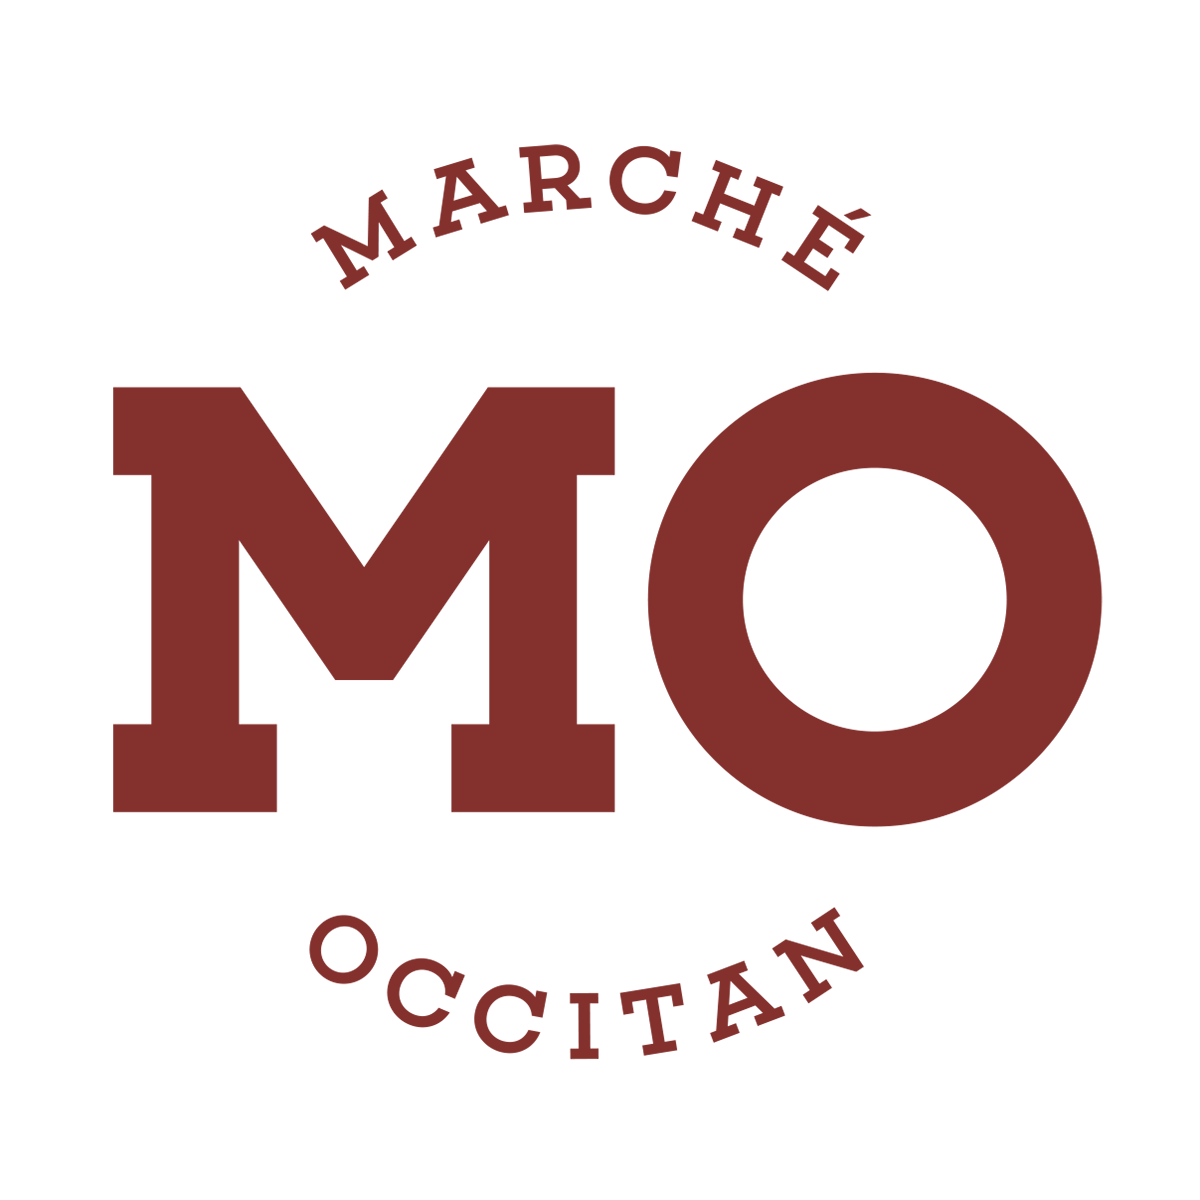 MarcheOccitan-MO_LOGO-CIRCULAIRE-RVB.png